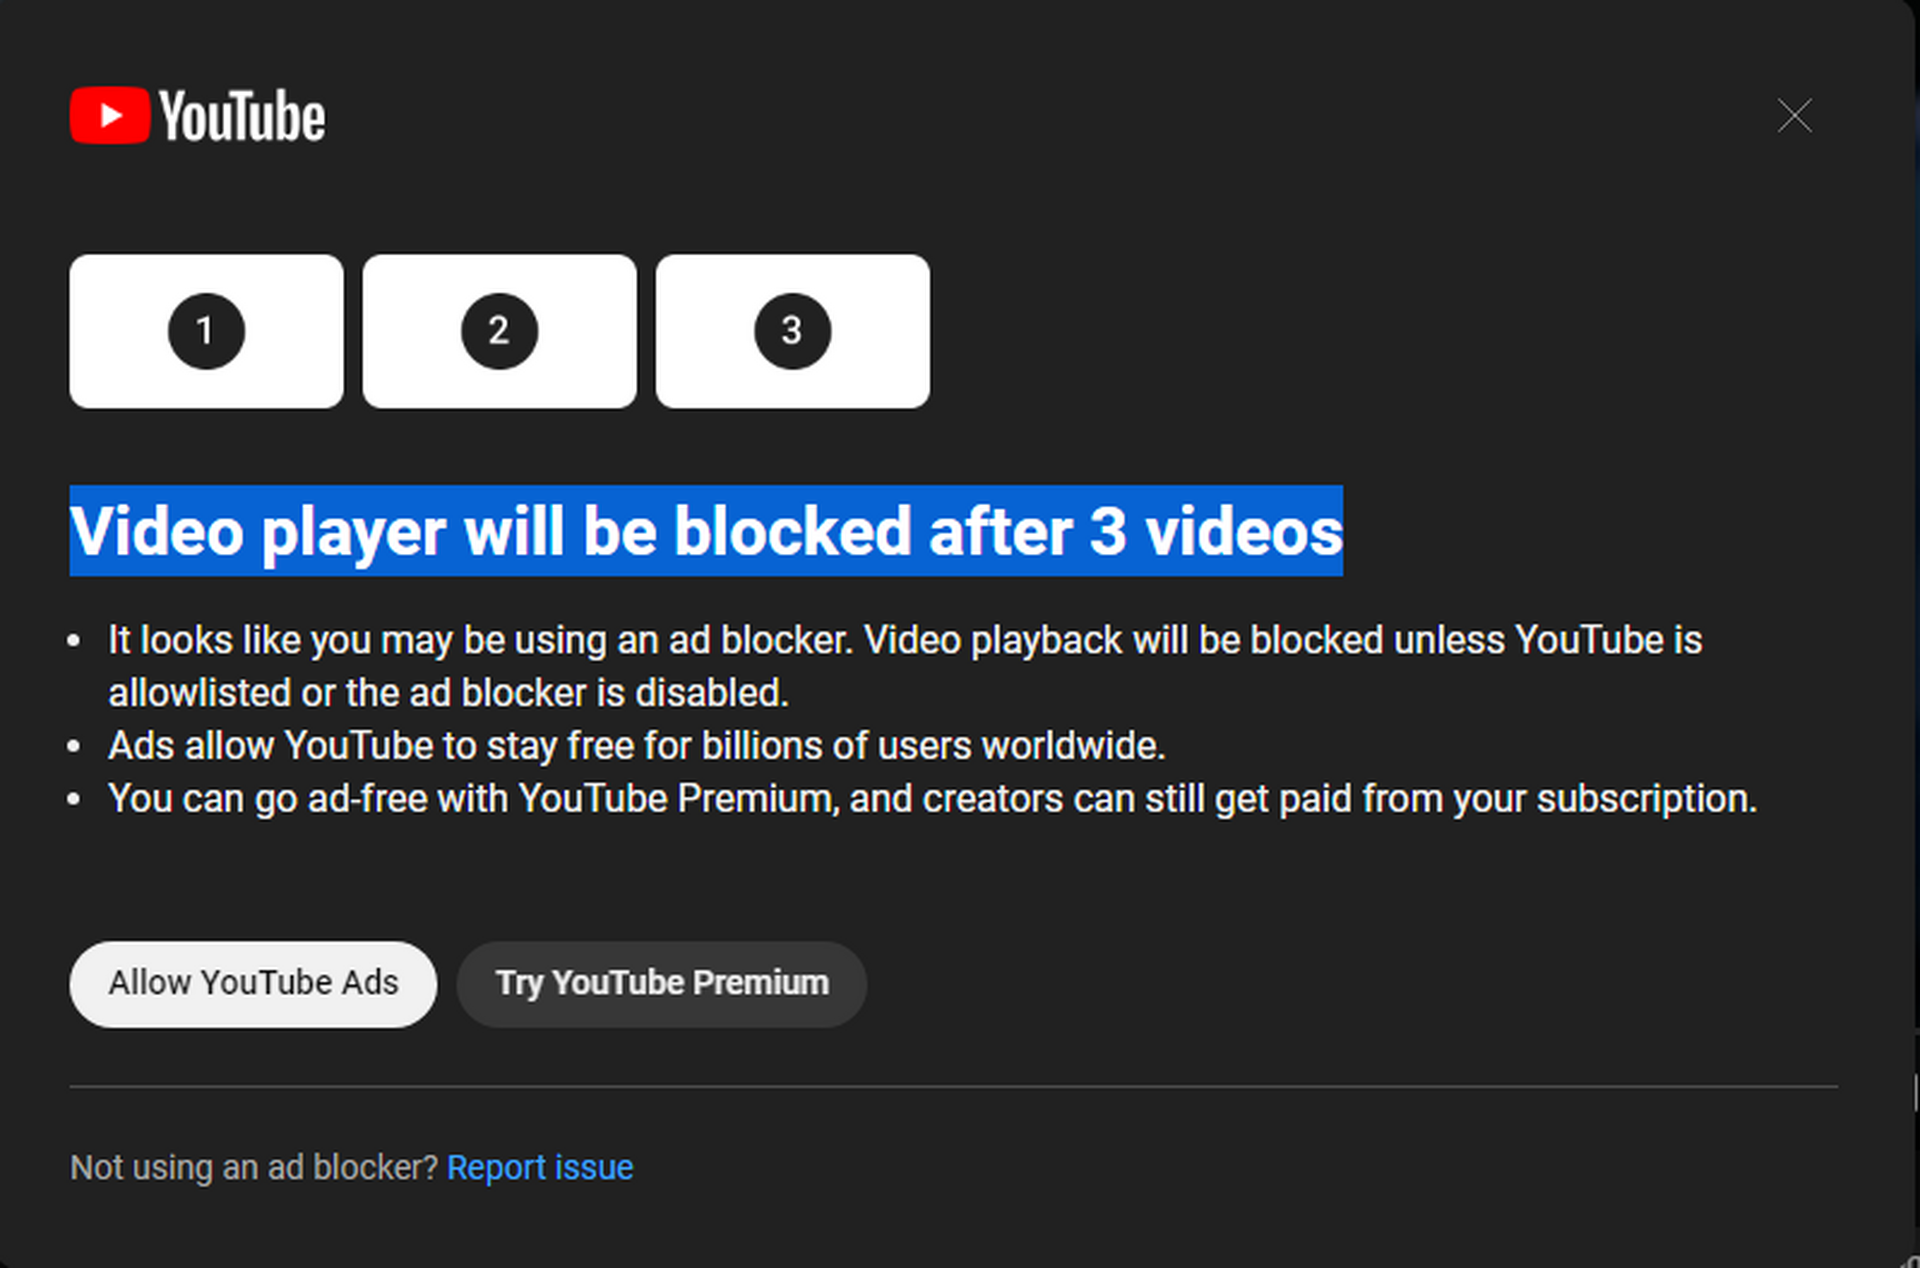 YouTubeが広告ブロック使用ユーザーに警告開始。無視を続ければ再生不可に テクノエッジ TechnoEdge